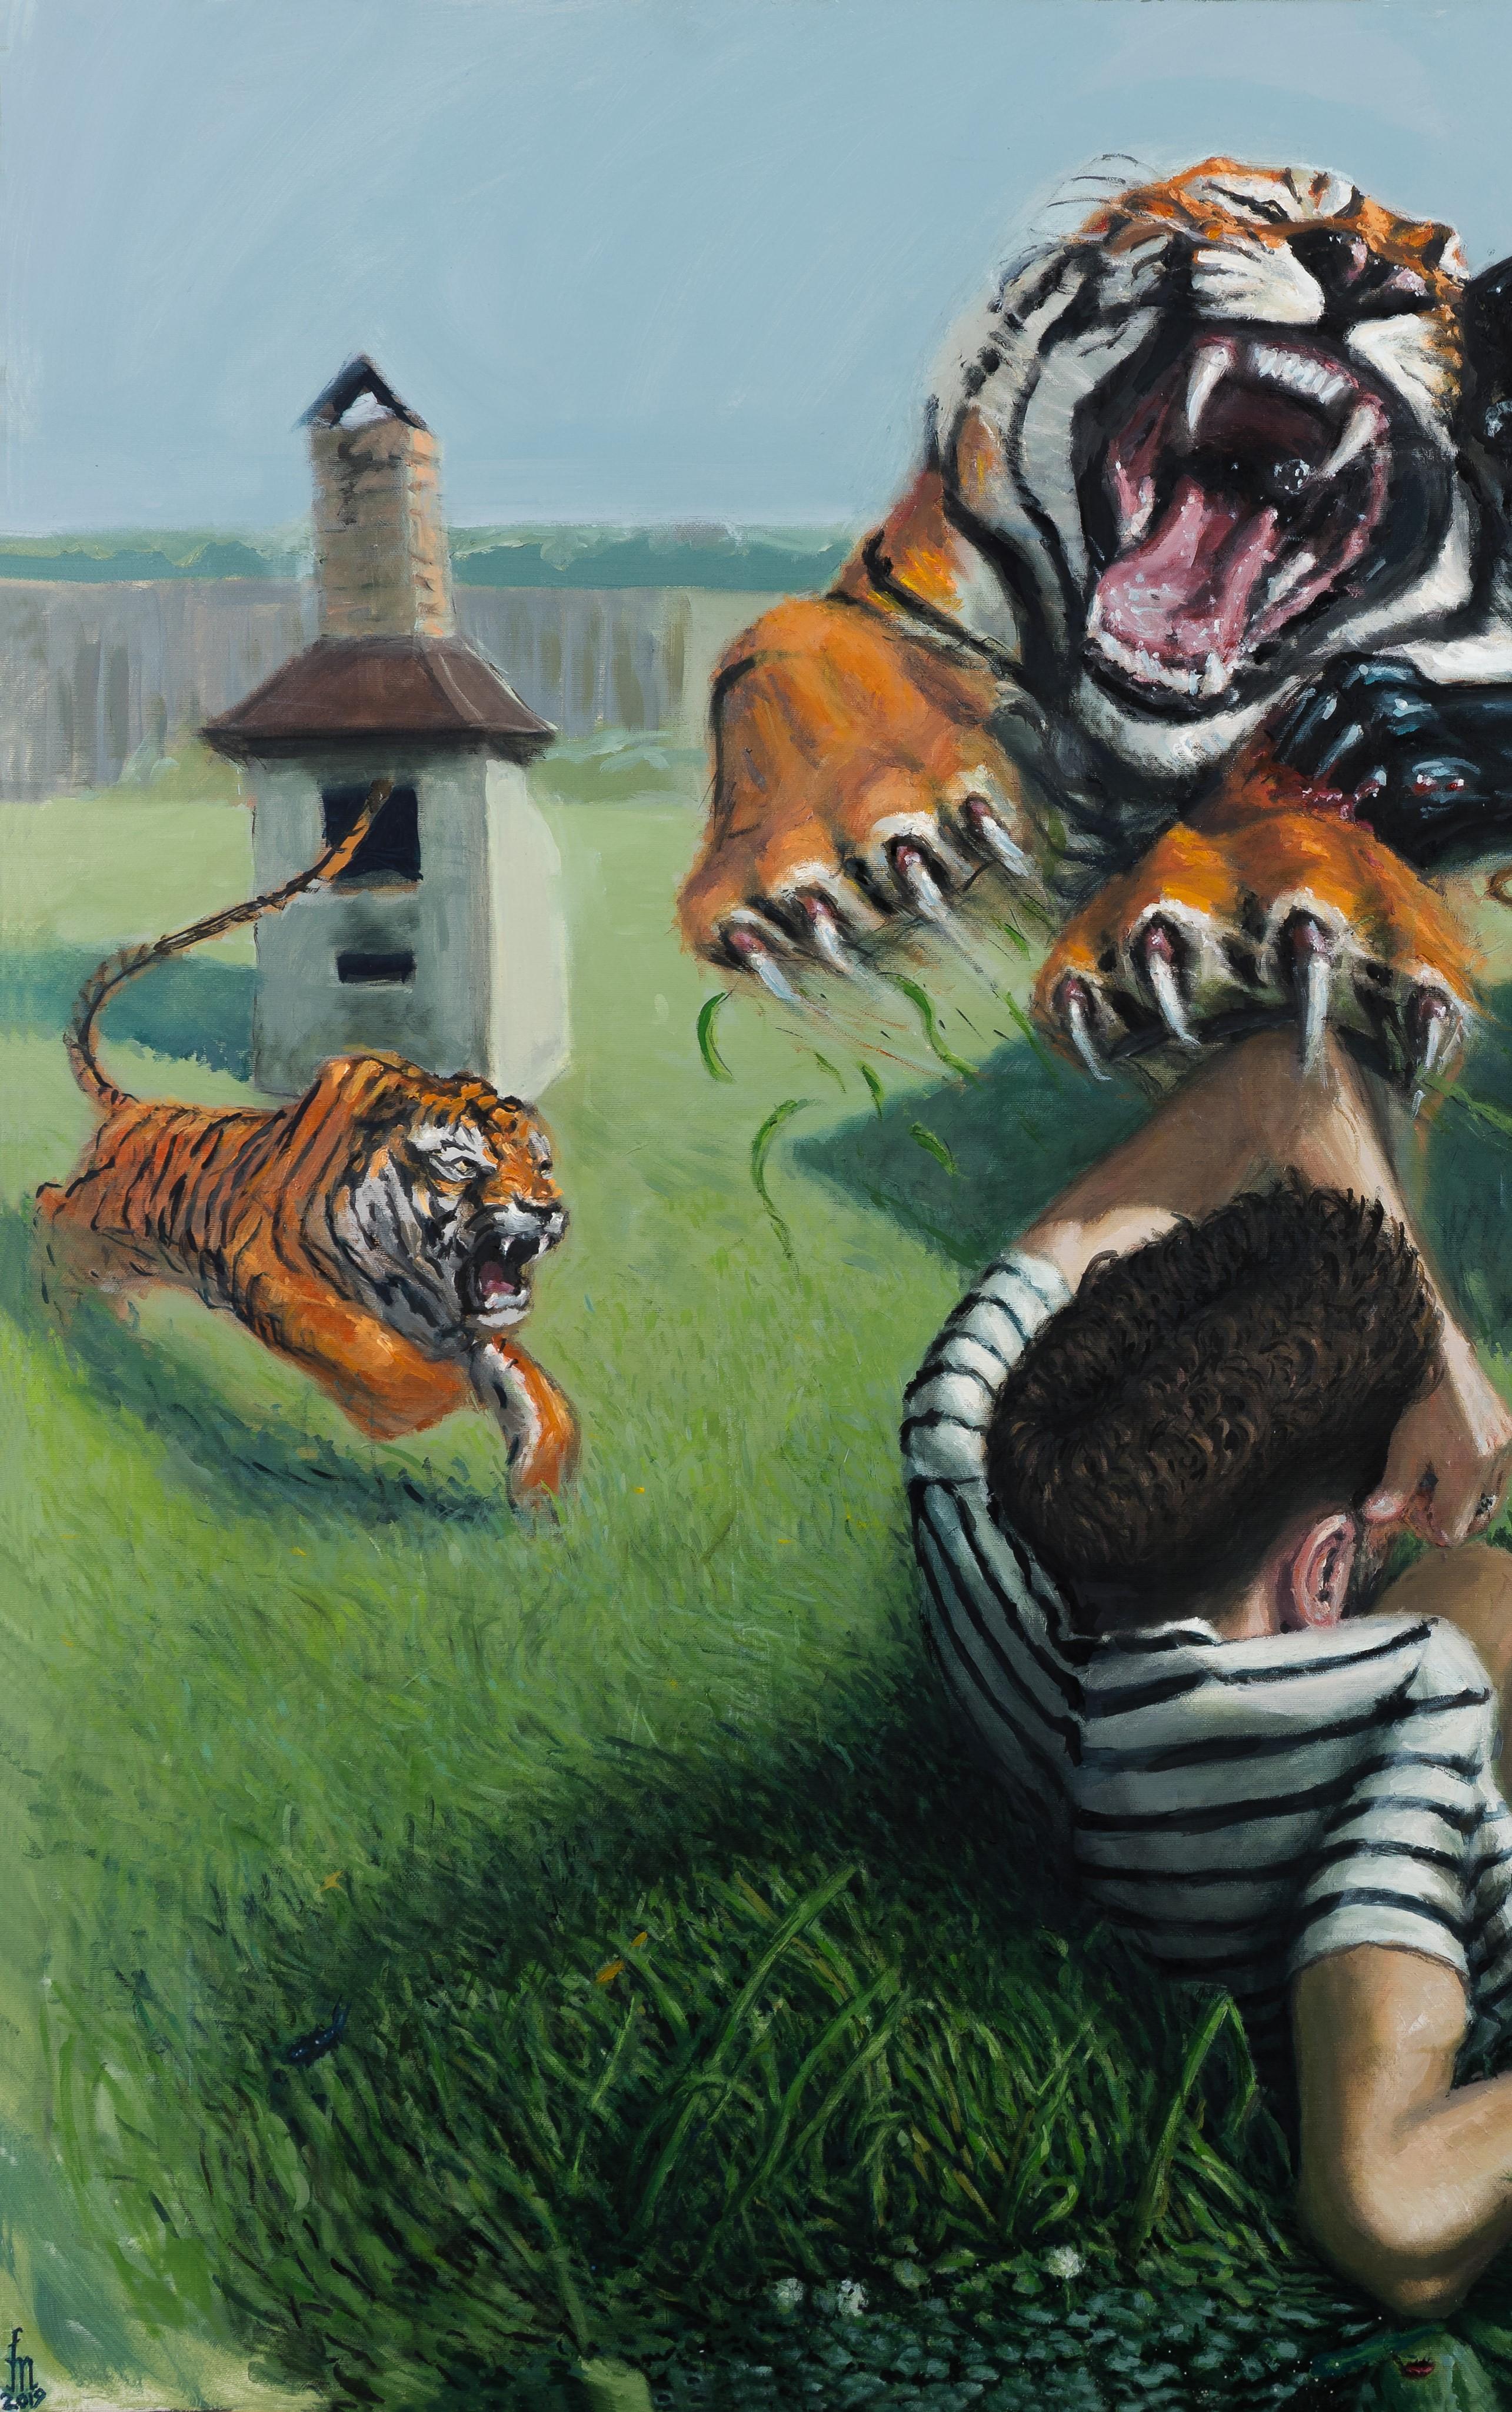 antimated tiger fighting black panther